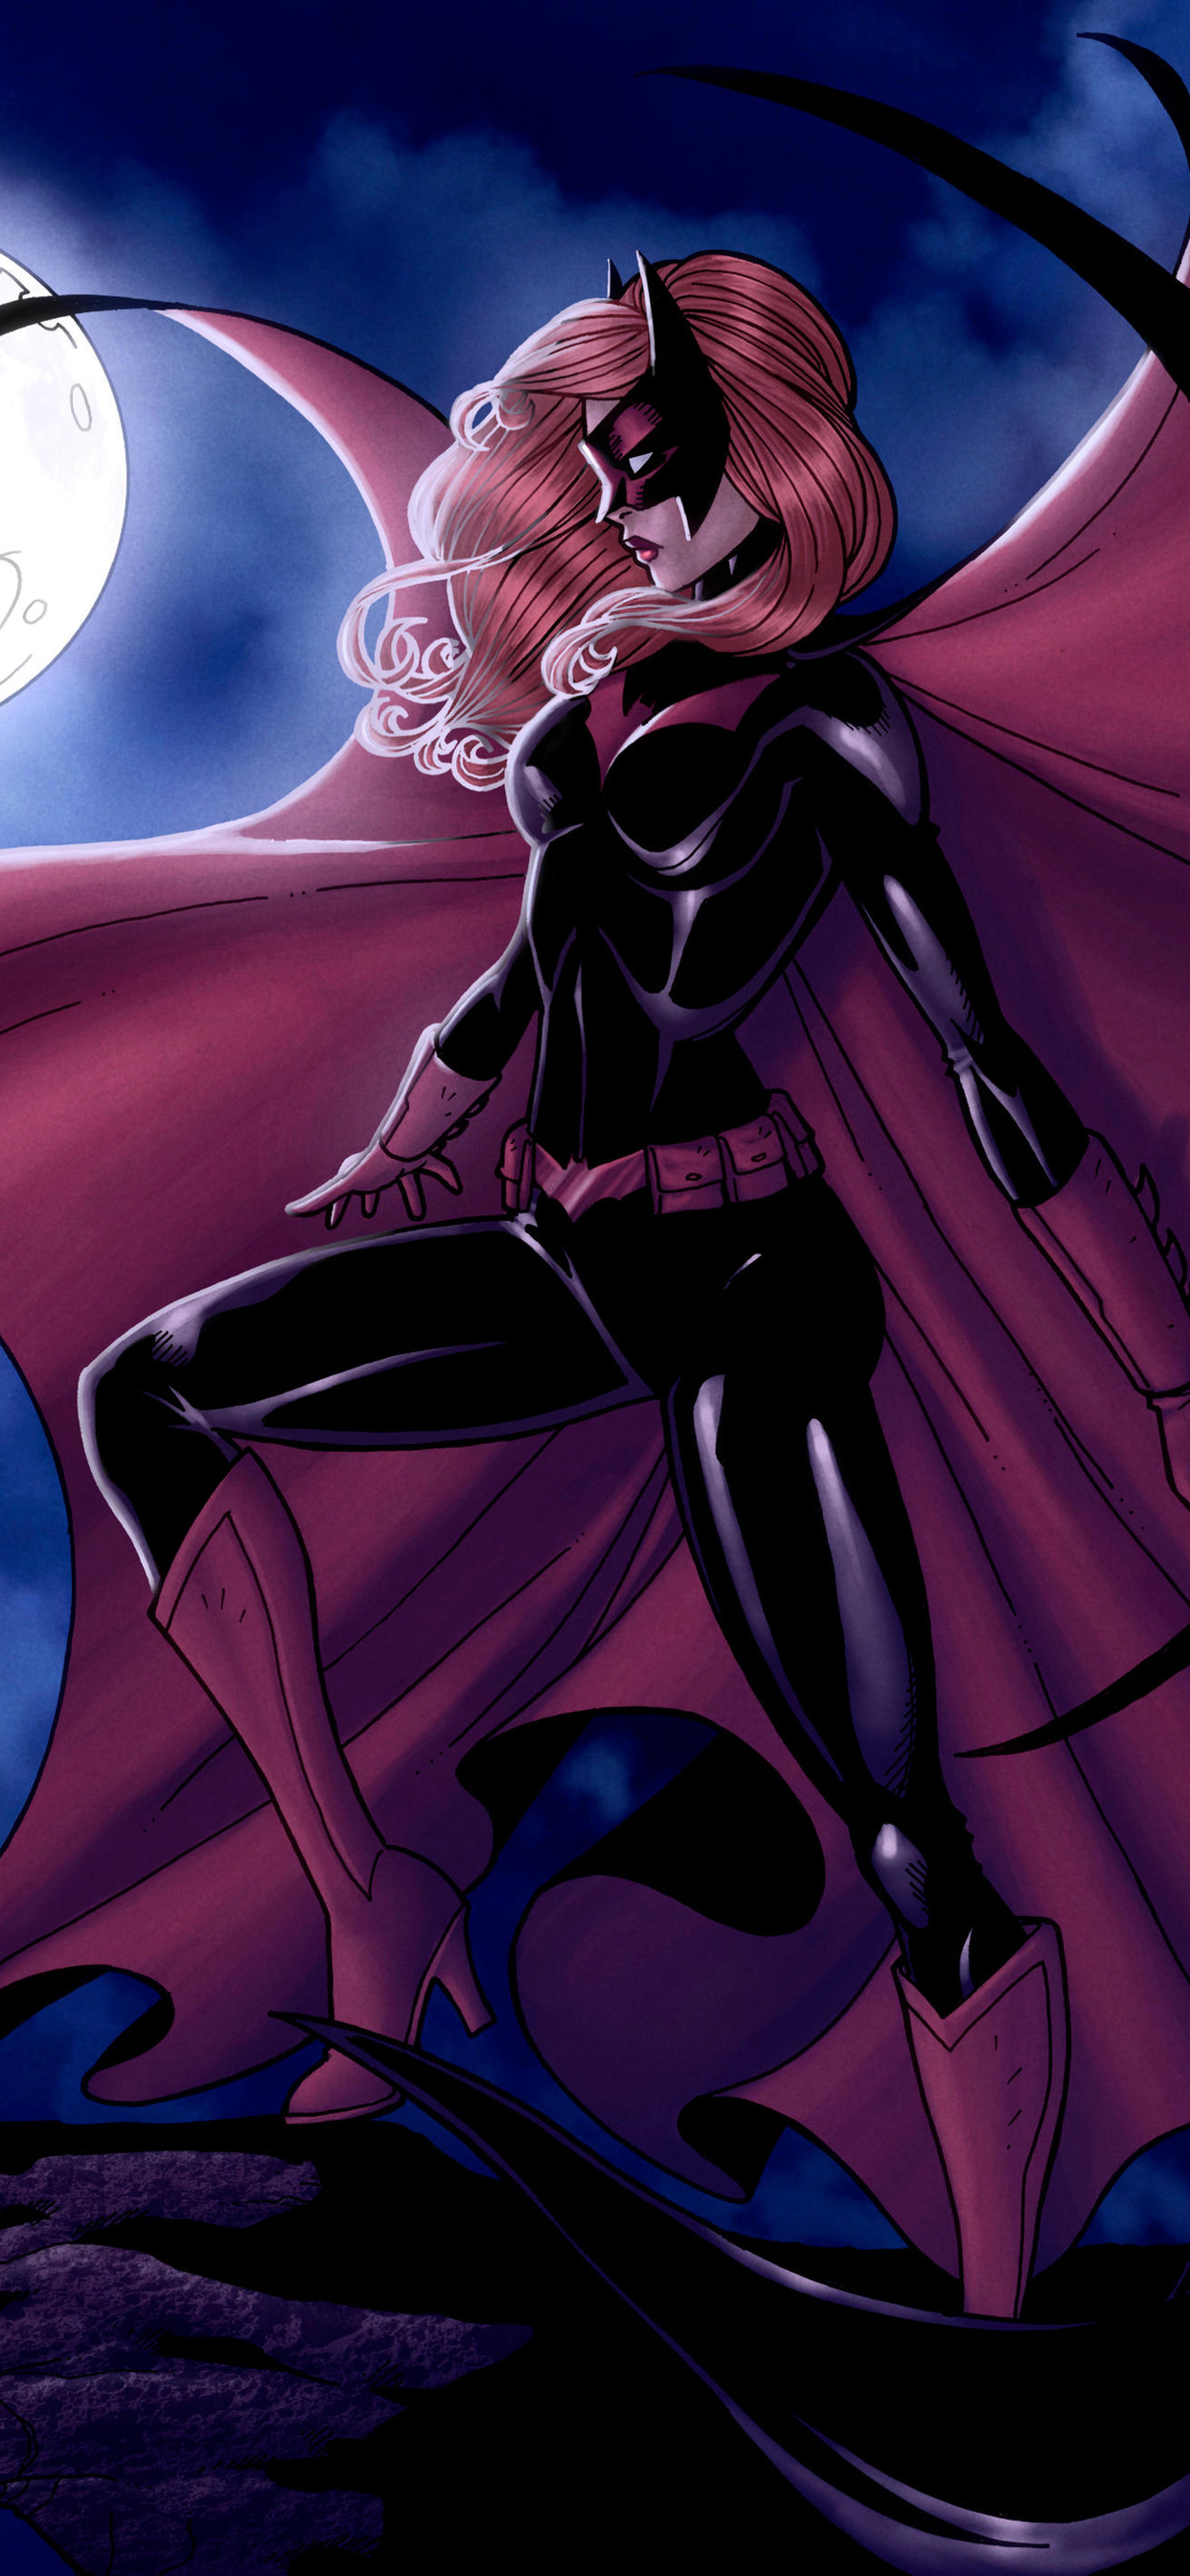 Batwoman Art 2019 iPhone XS MAX HD 4k Wallpaper, Image